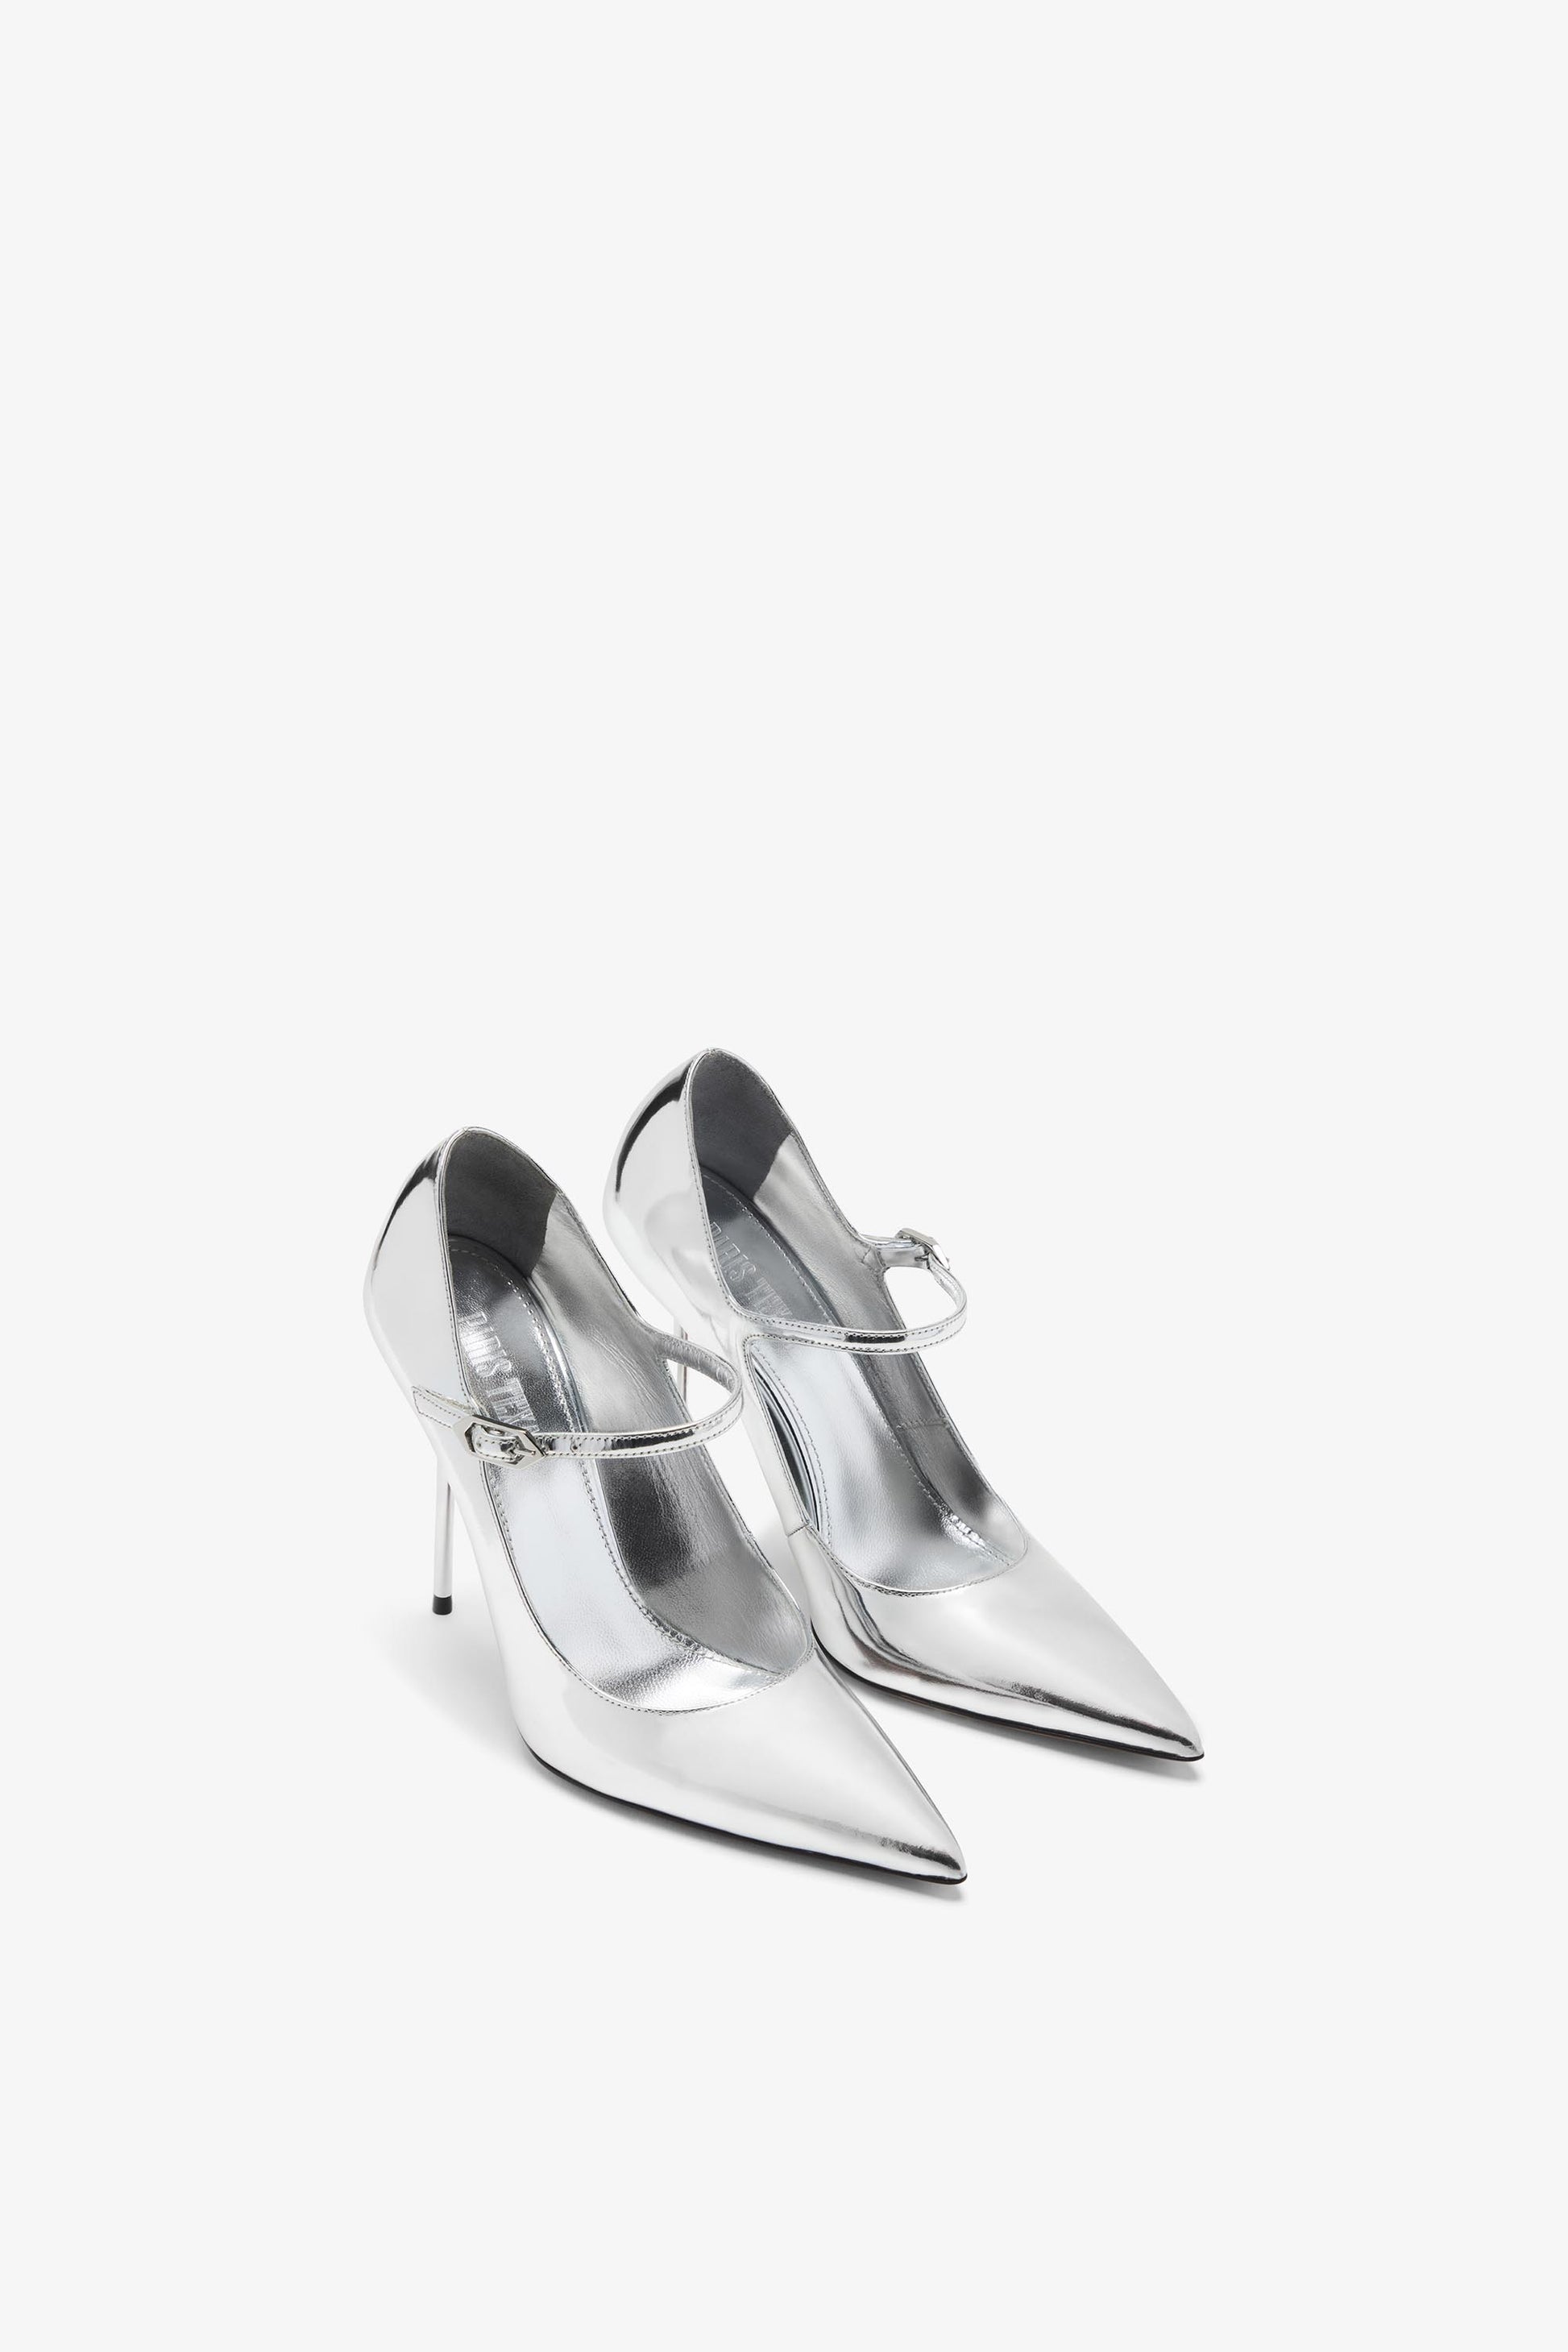 Zapato de sal'on Mary Jane de piel metalizada plata